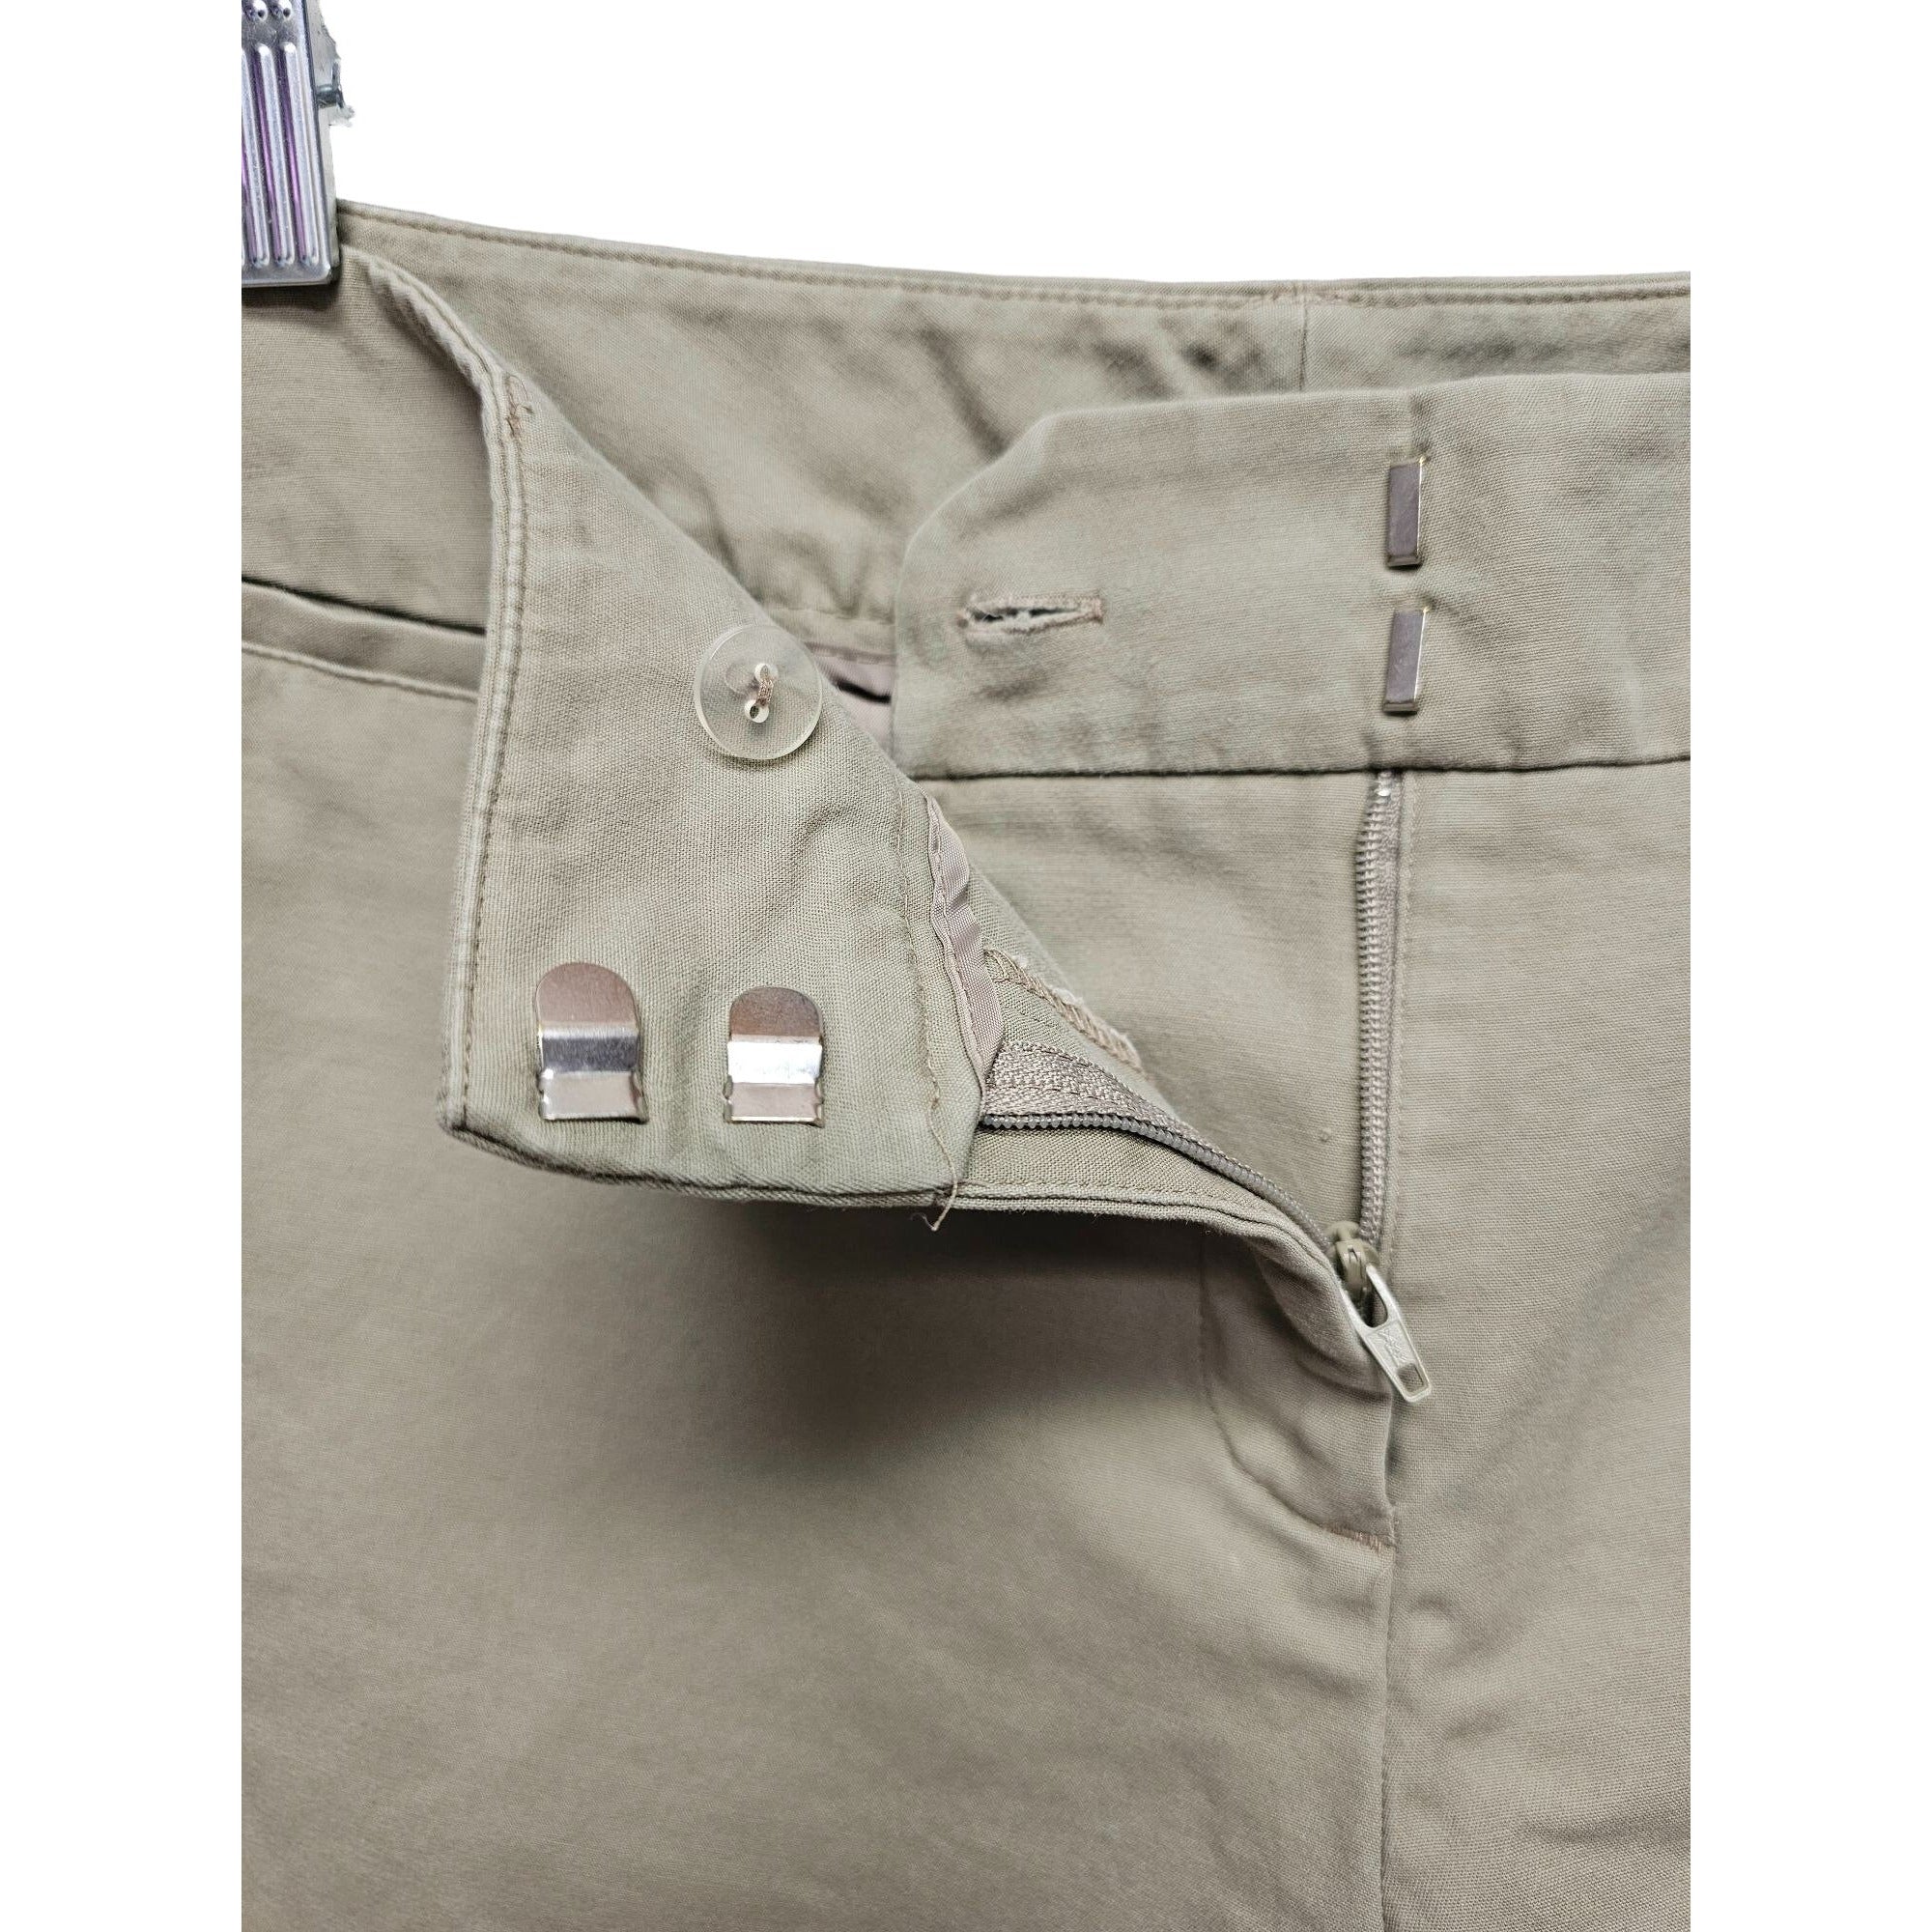 New York & Company Stretch Cropped, Capri Tan Pants, Size 12